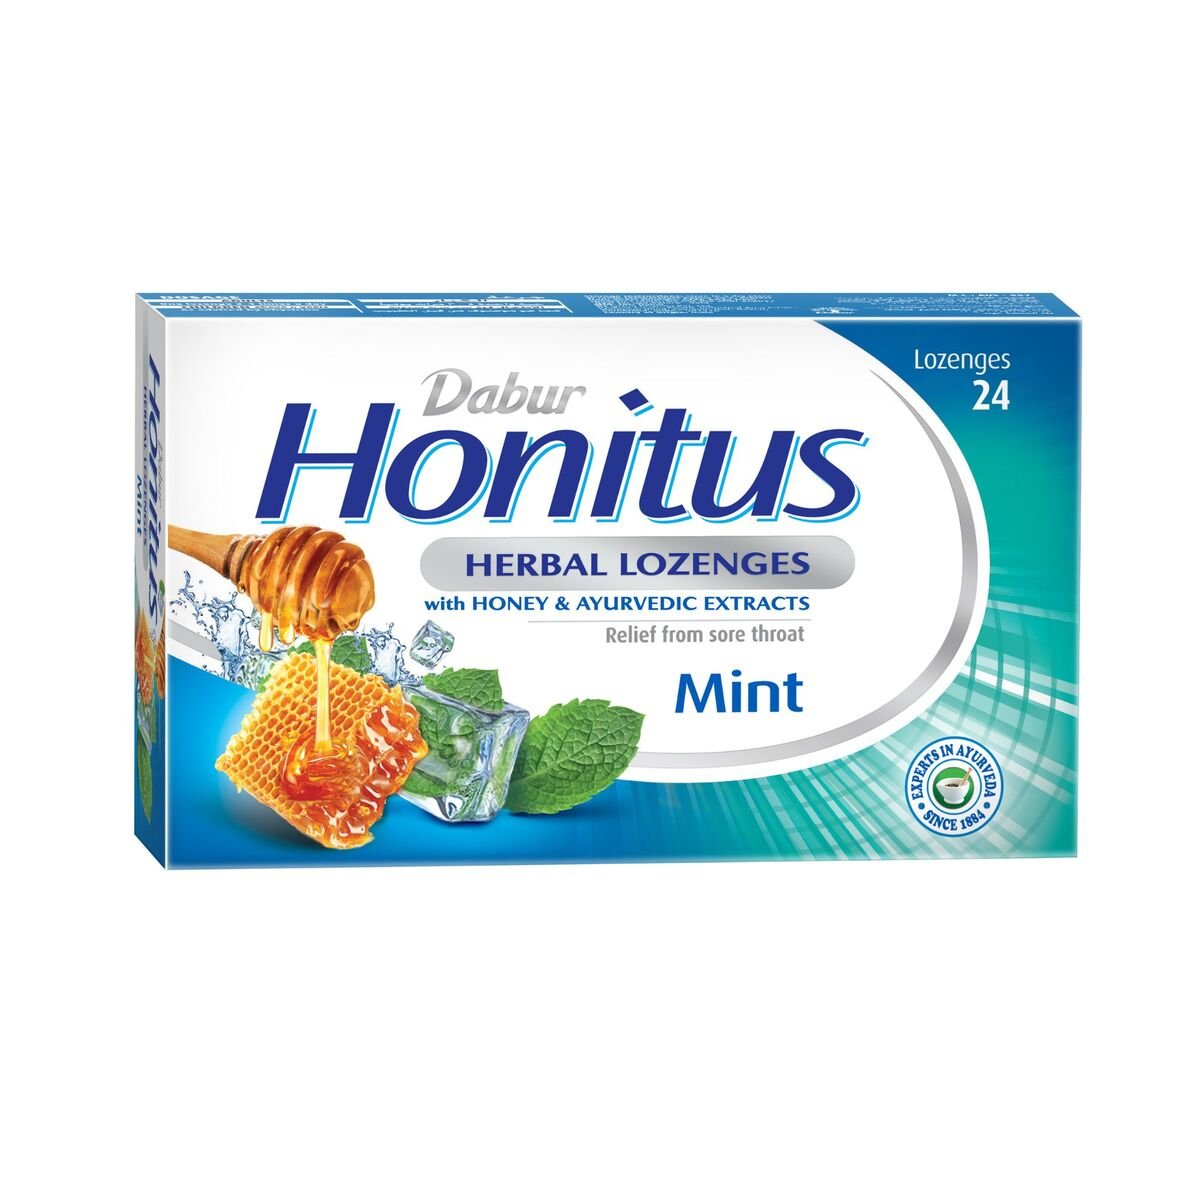 Dabur Honitus Herbal Lozenges with Mint Flavor 24 pcs